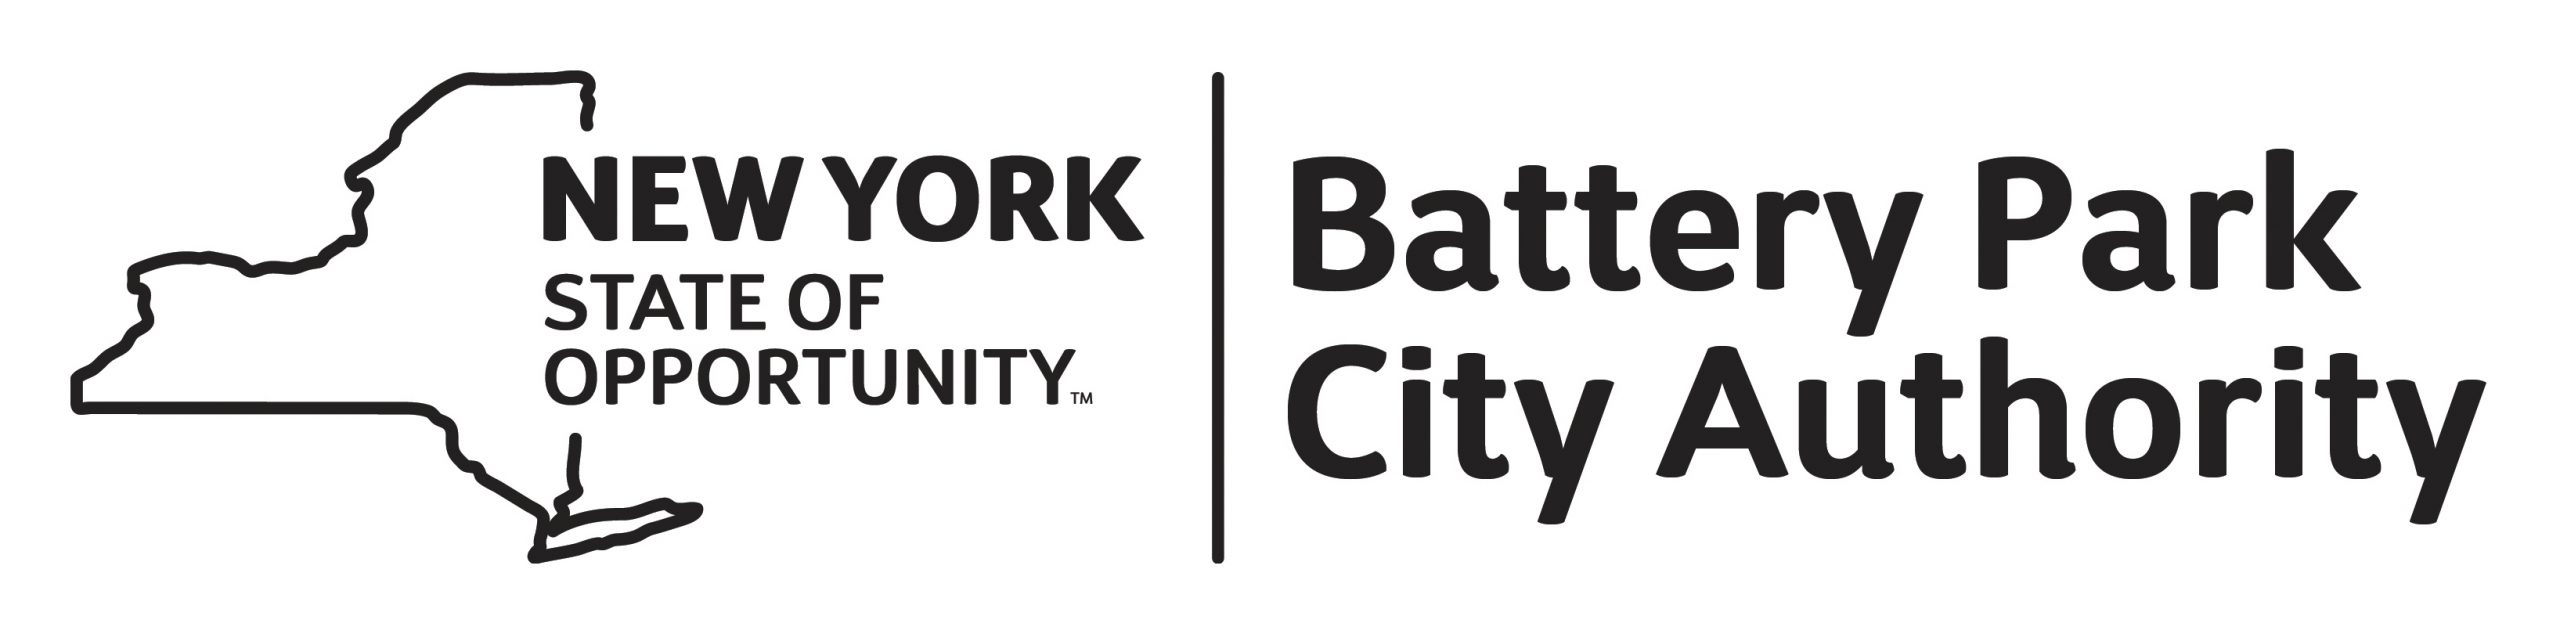 Battery Park City Authority